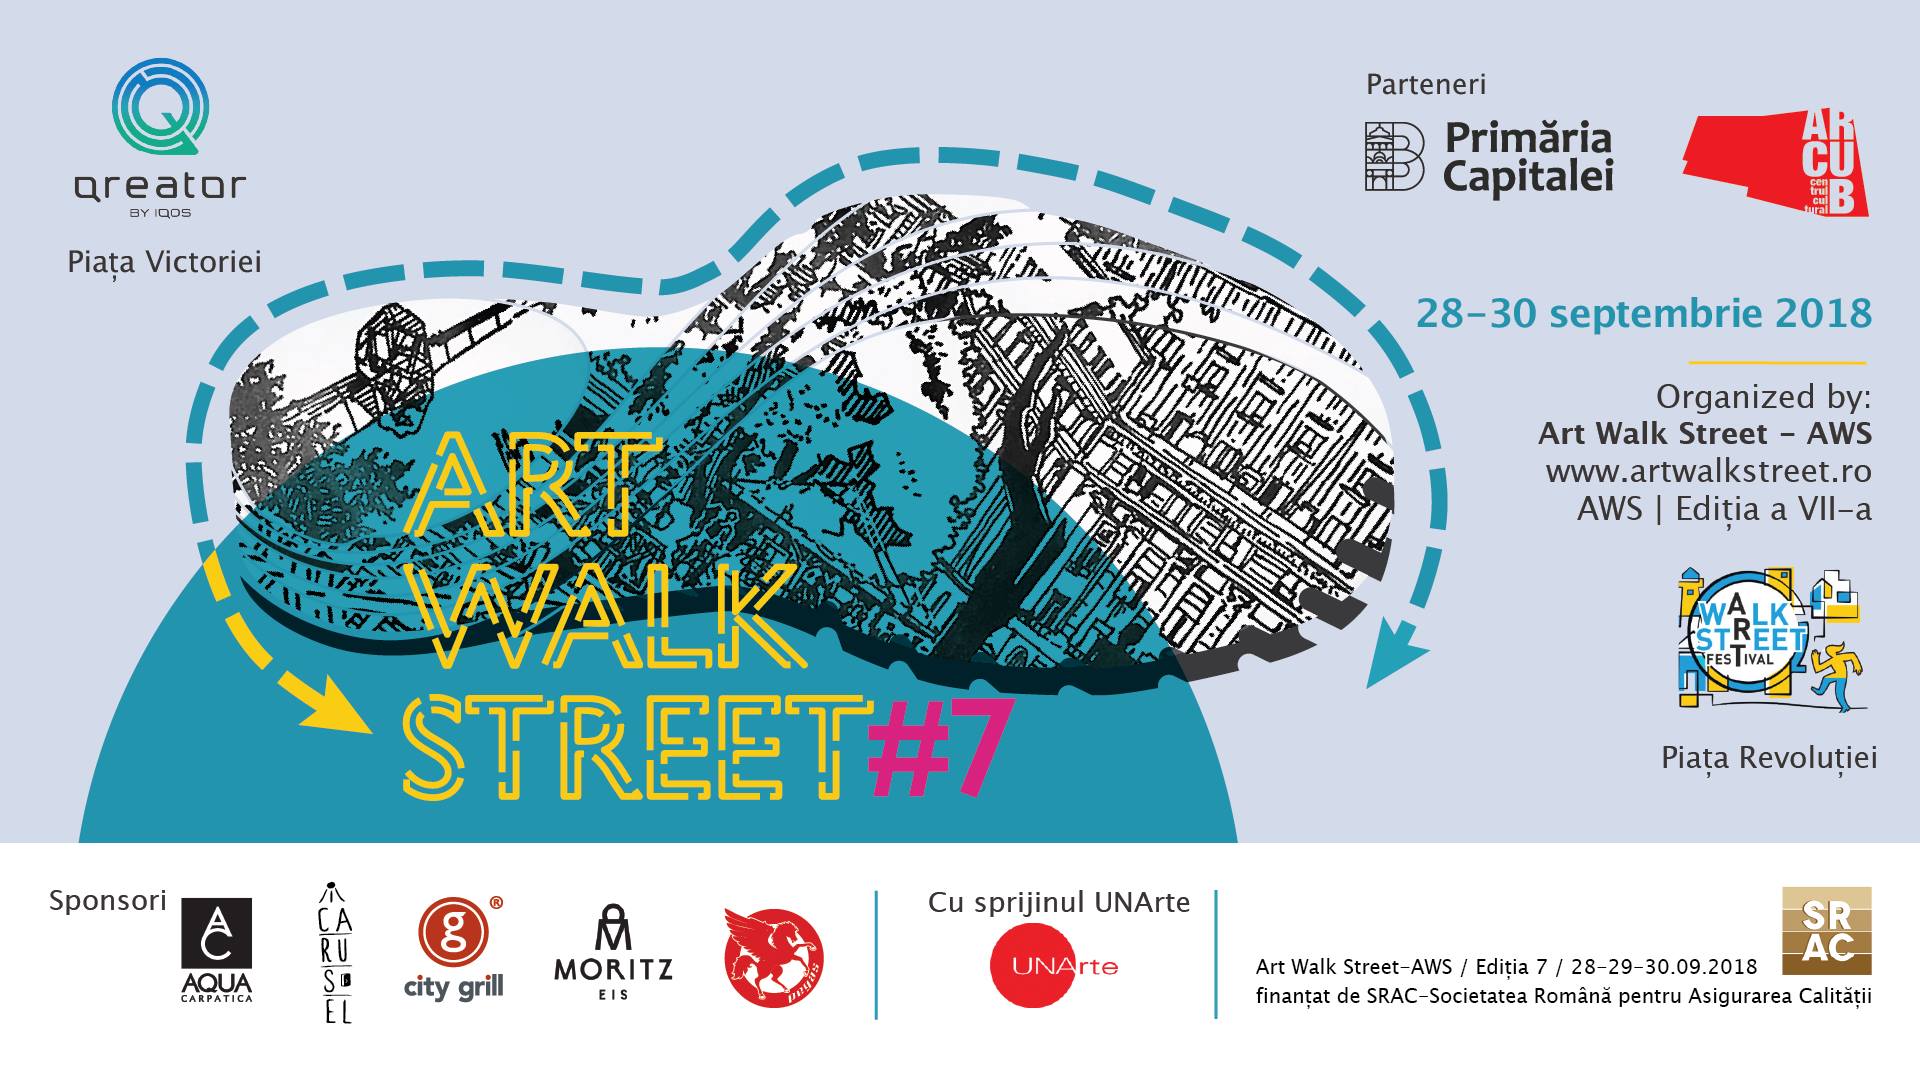 Art Walk Street AWS in Piata Revolutiei 2018